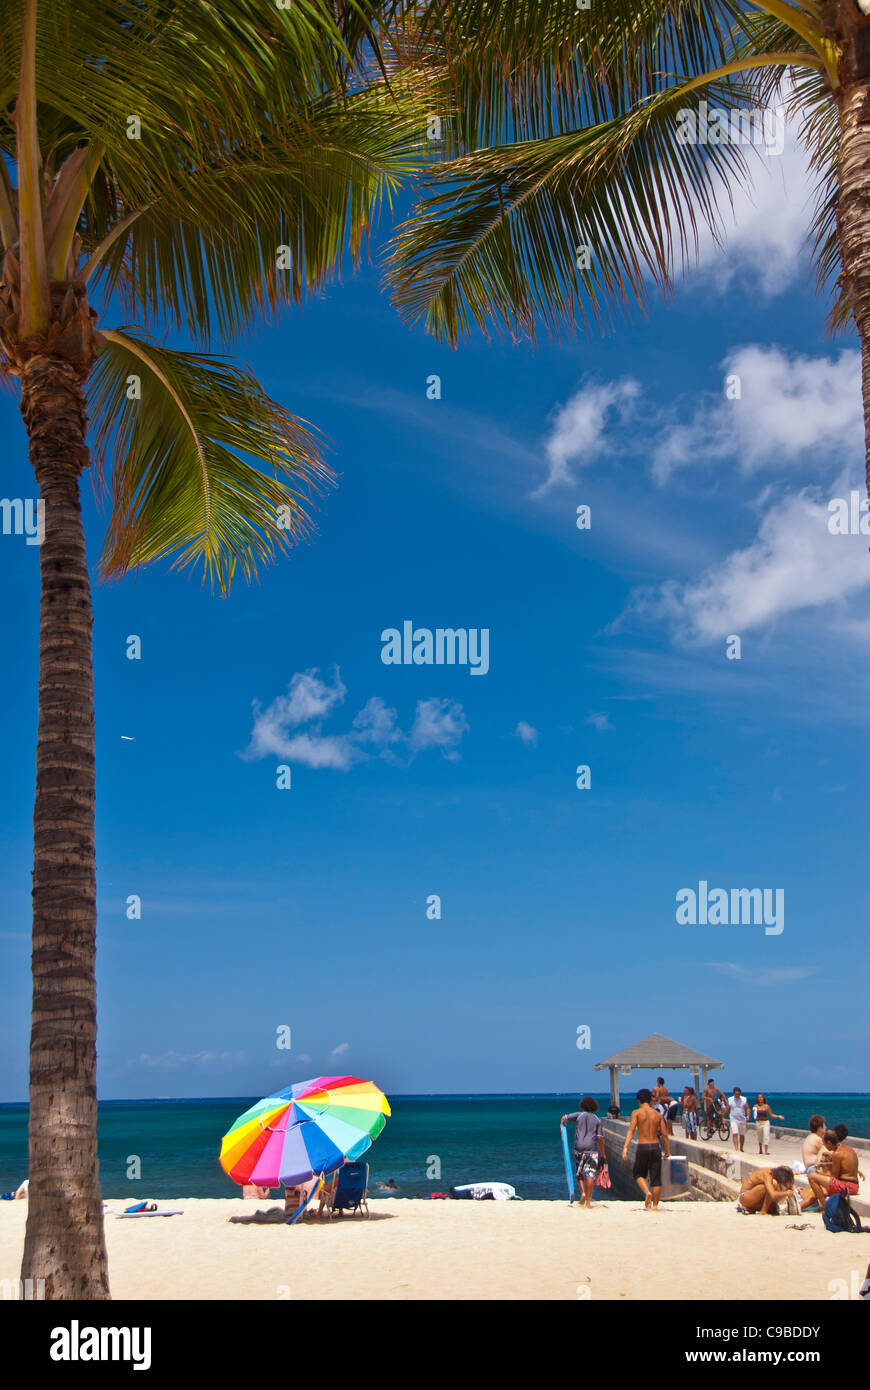 Waikiki Beach, Hawaii, colorful beach umbrella, sunbathers and palm trees Stock Photo